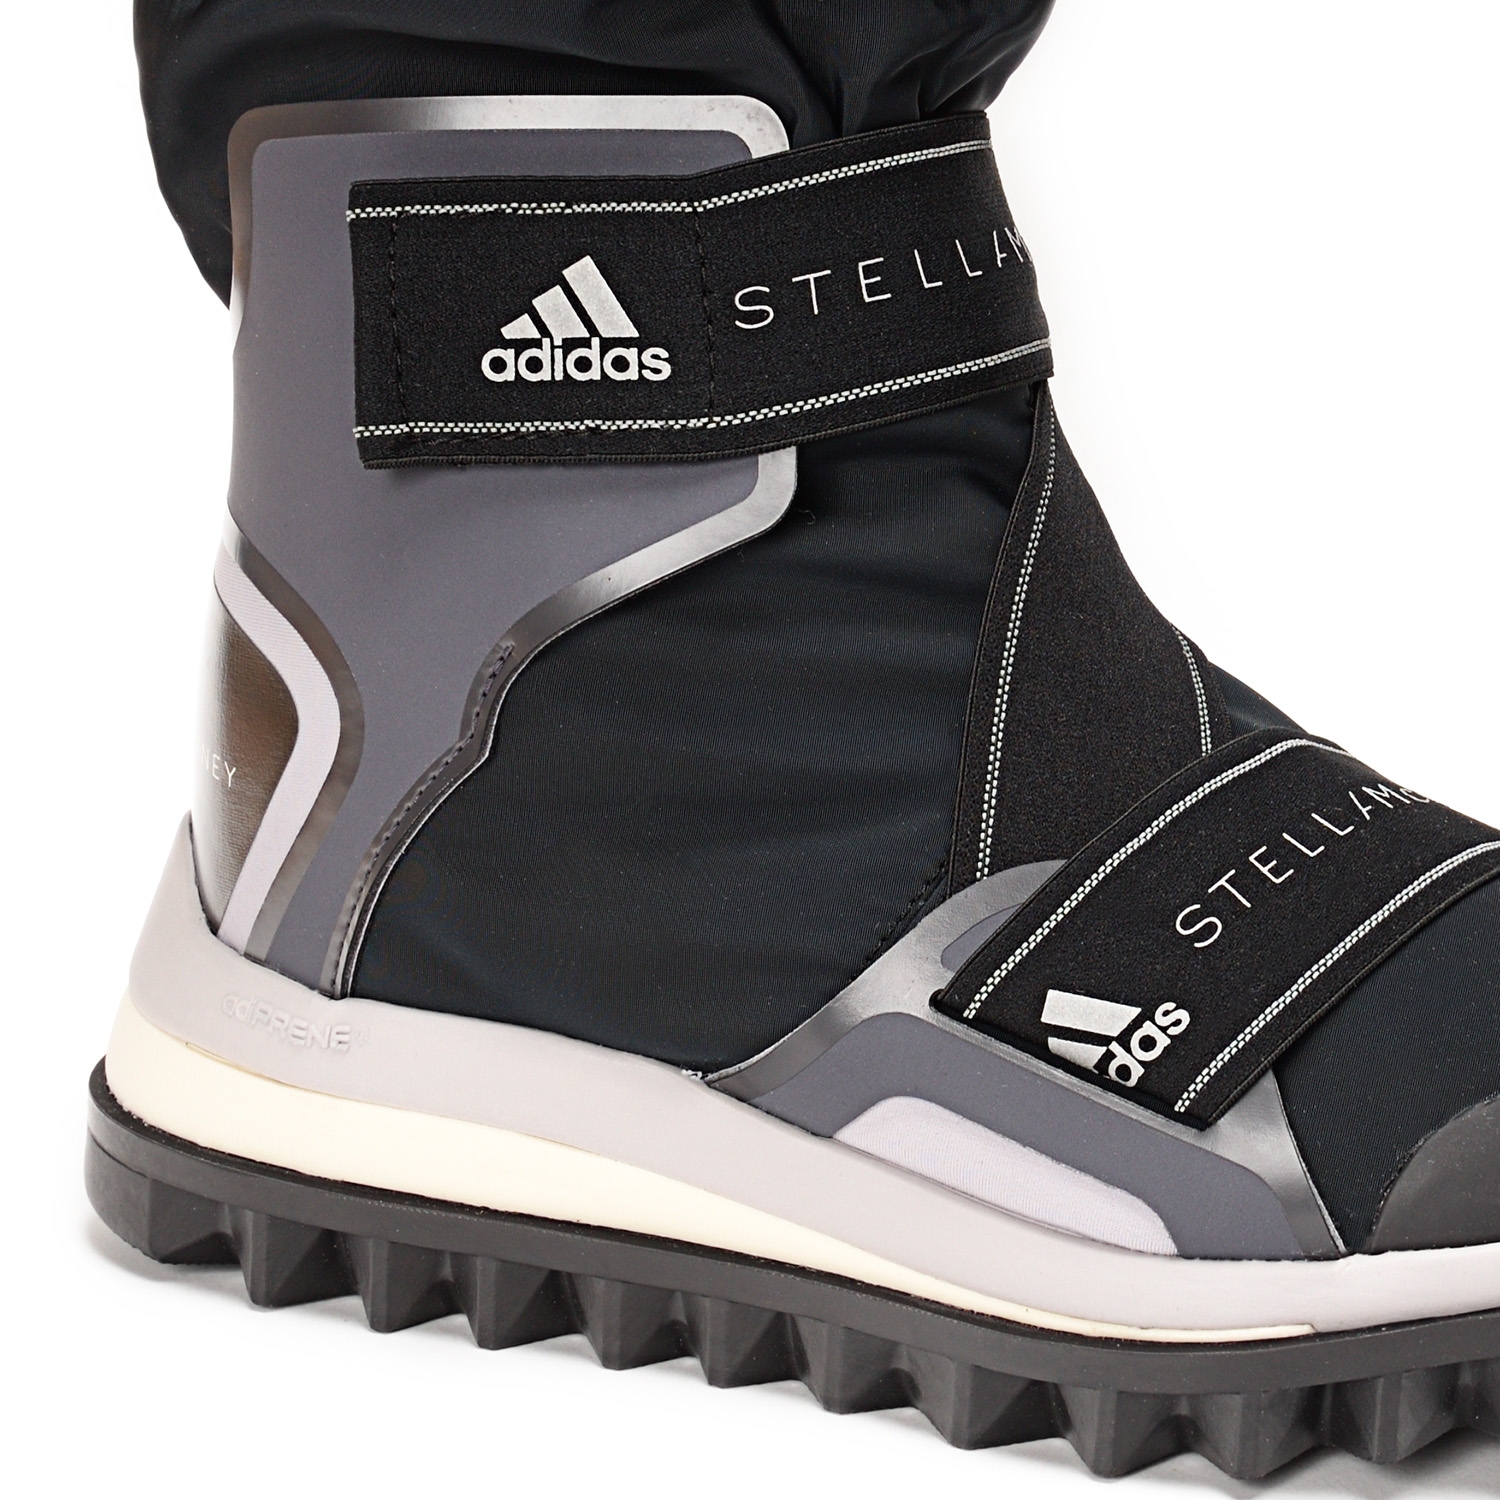 adidas by Stella McCartney core black / pearl grey / night steel-smc